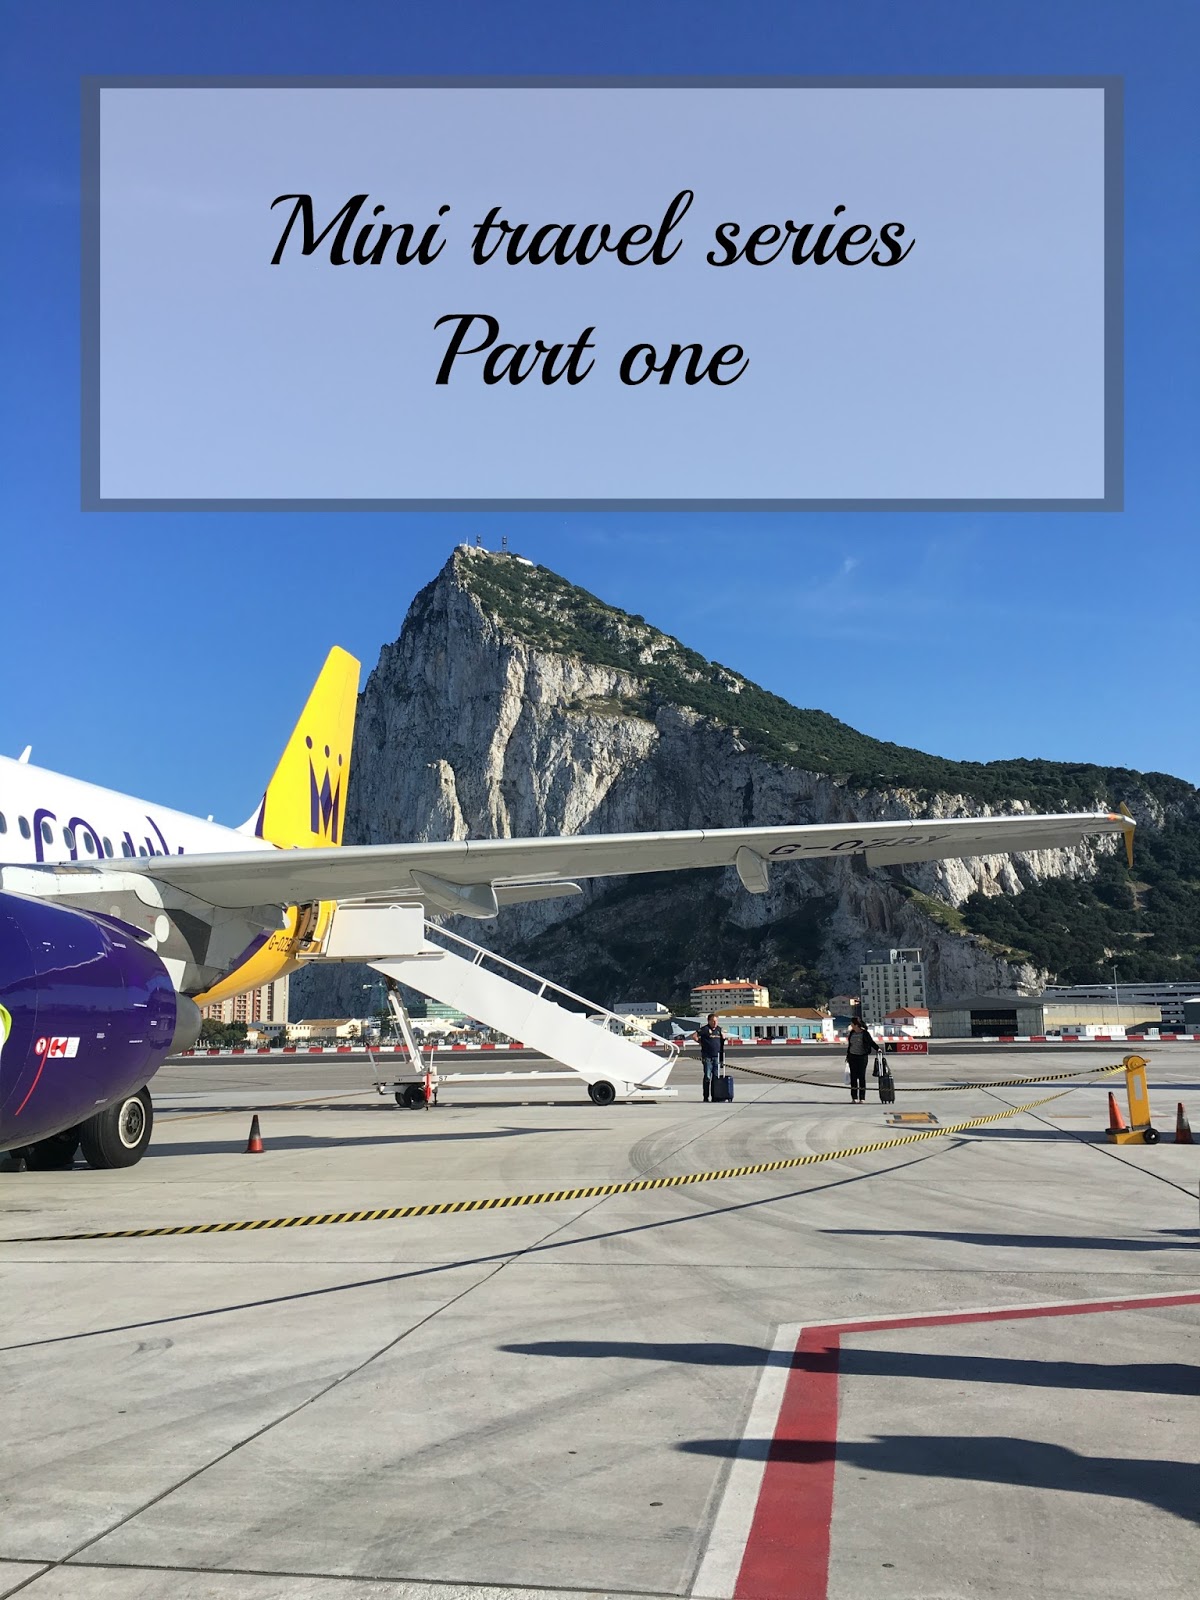 Gibraltar travel series holiday Spain 